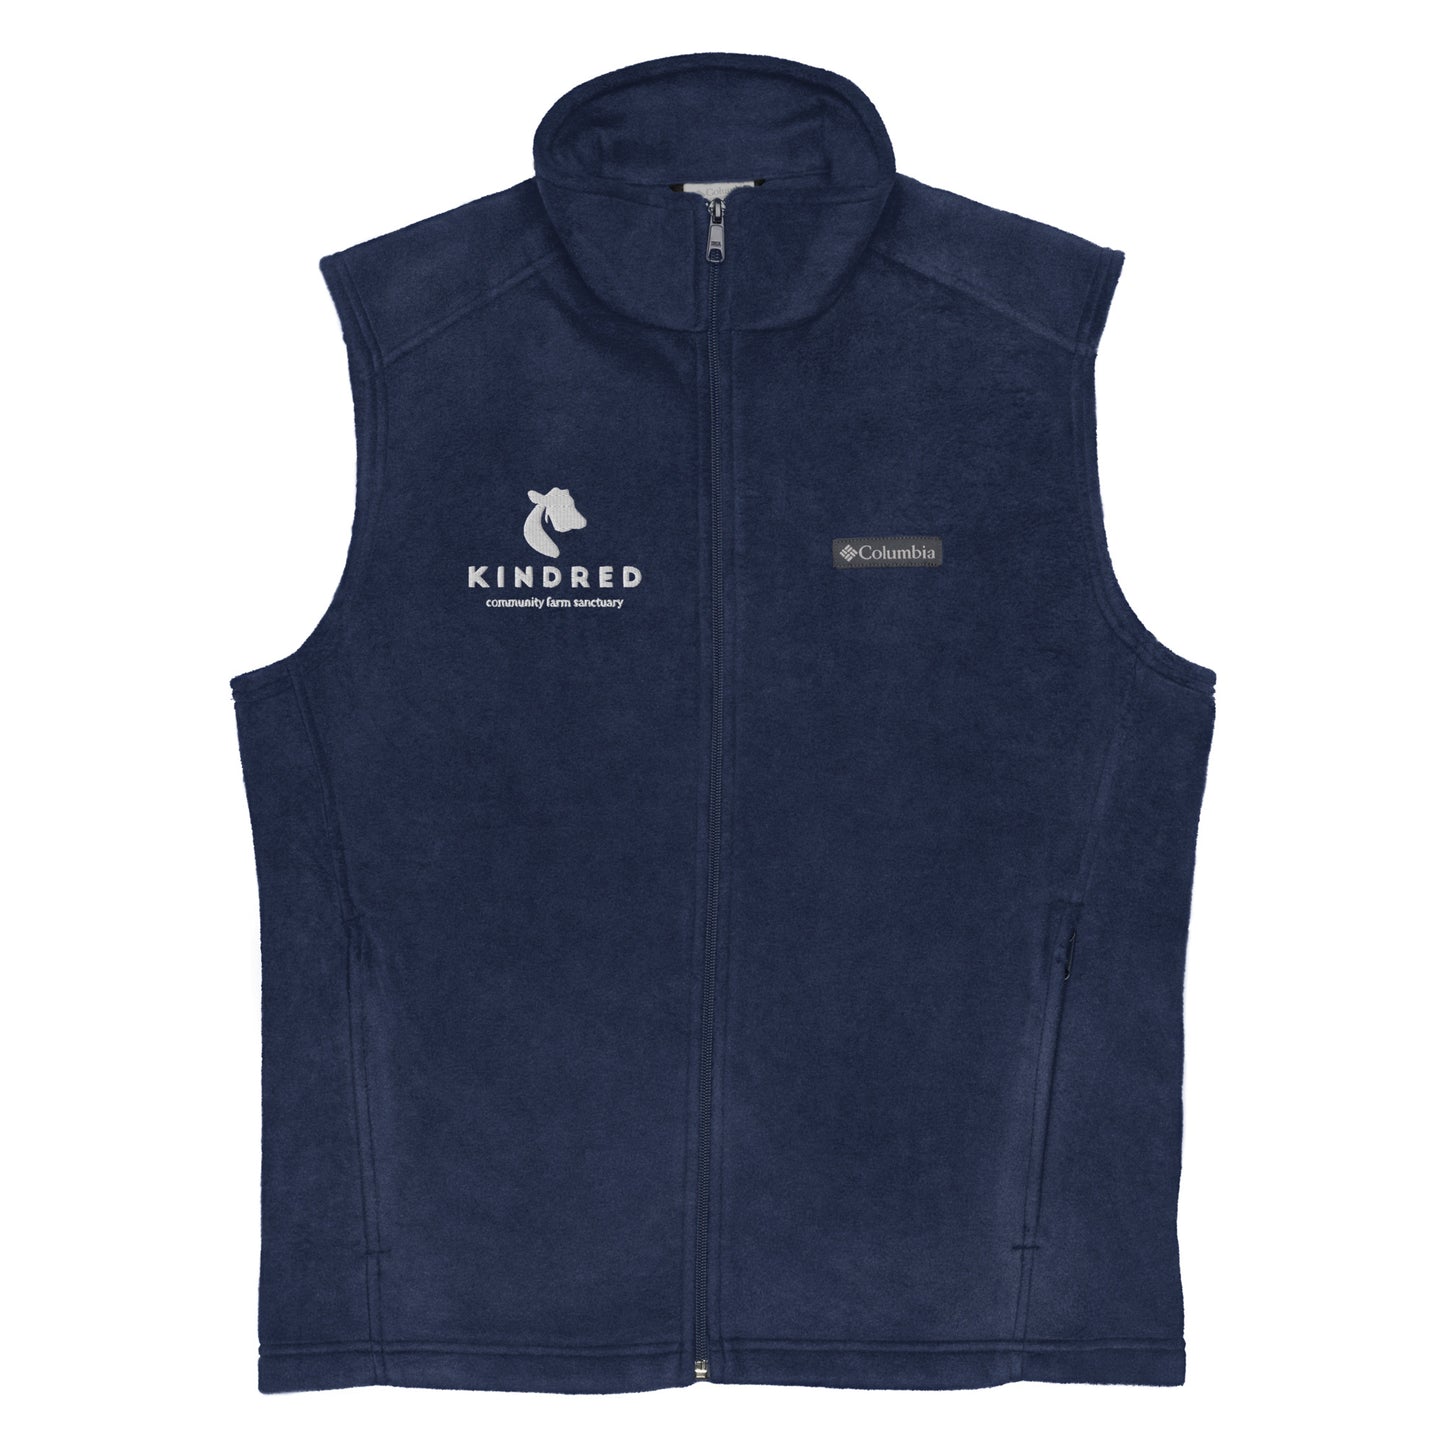 Men’s Columbia fleece vest - Donates $10